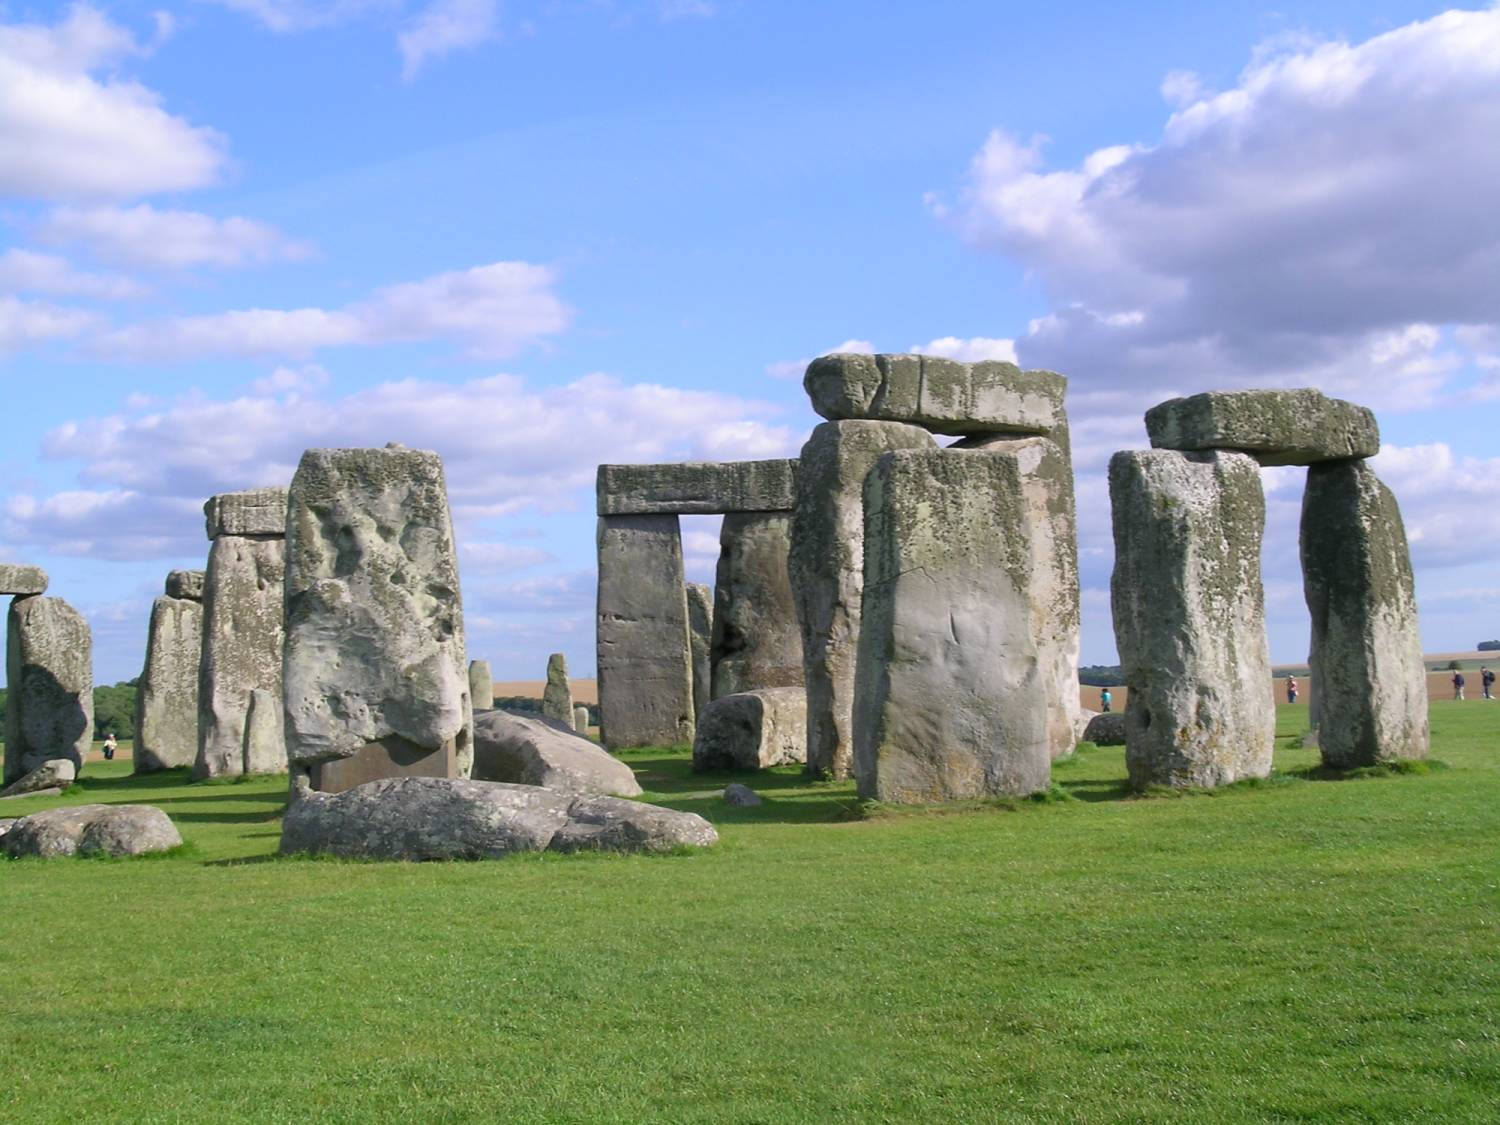 Stonehenge: 189 KB; click on the image to enlarge